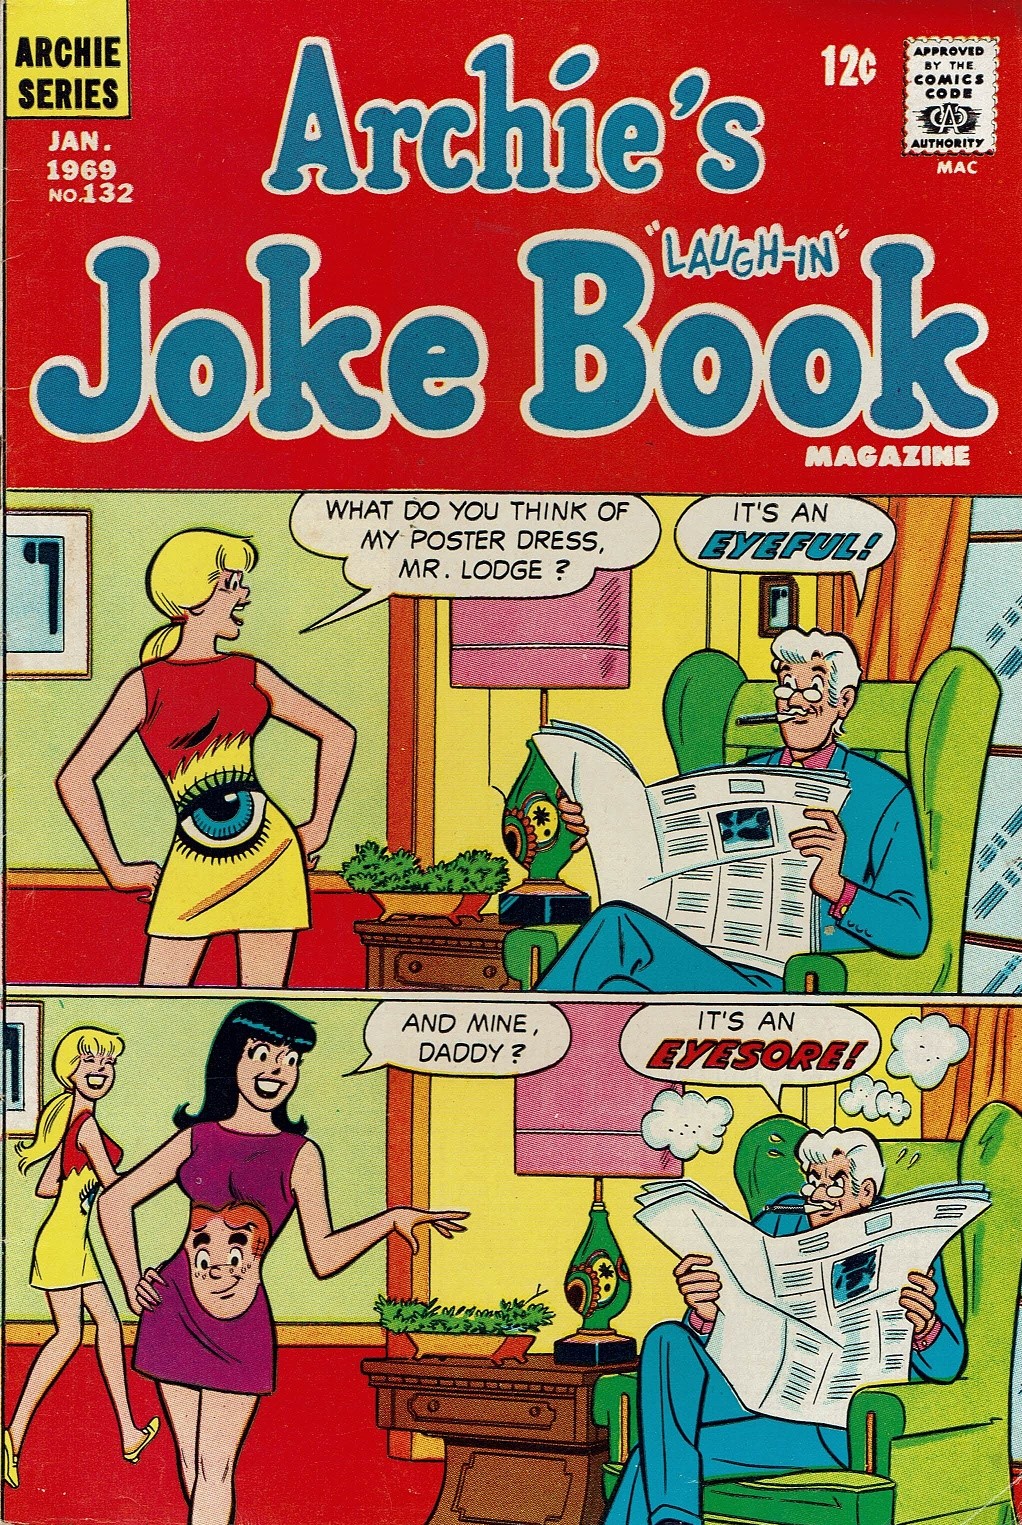 Archie's Joke Book Magazine issue 132 - Page 1